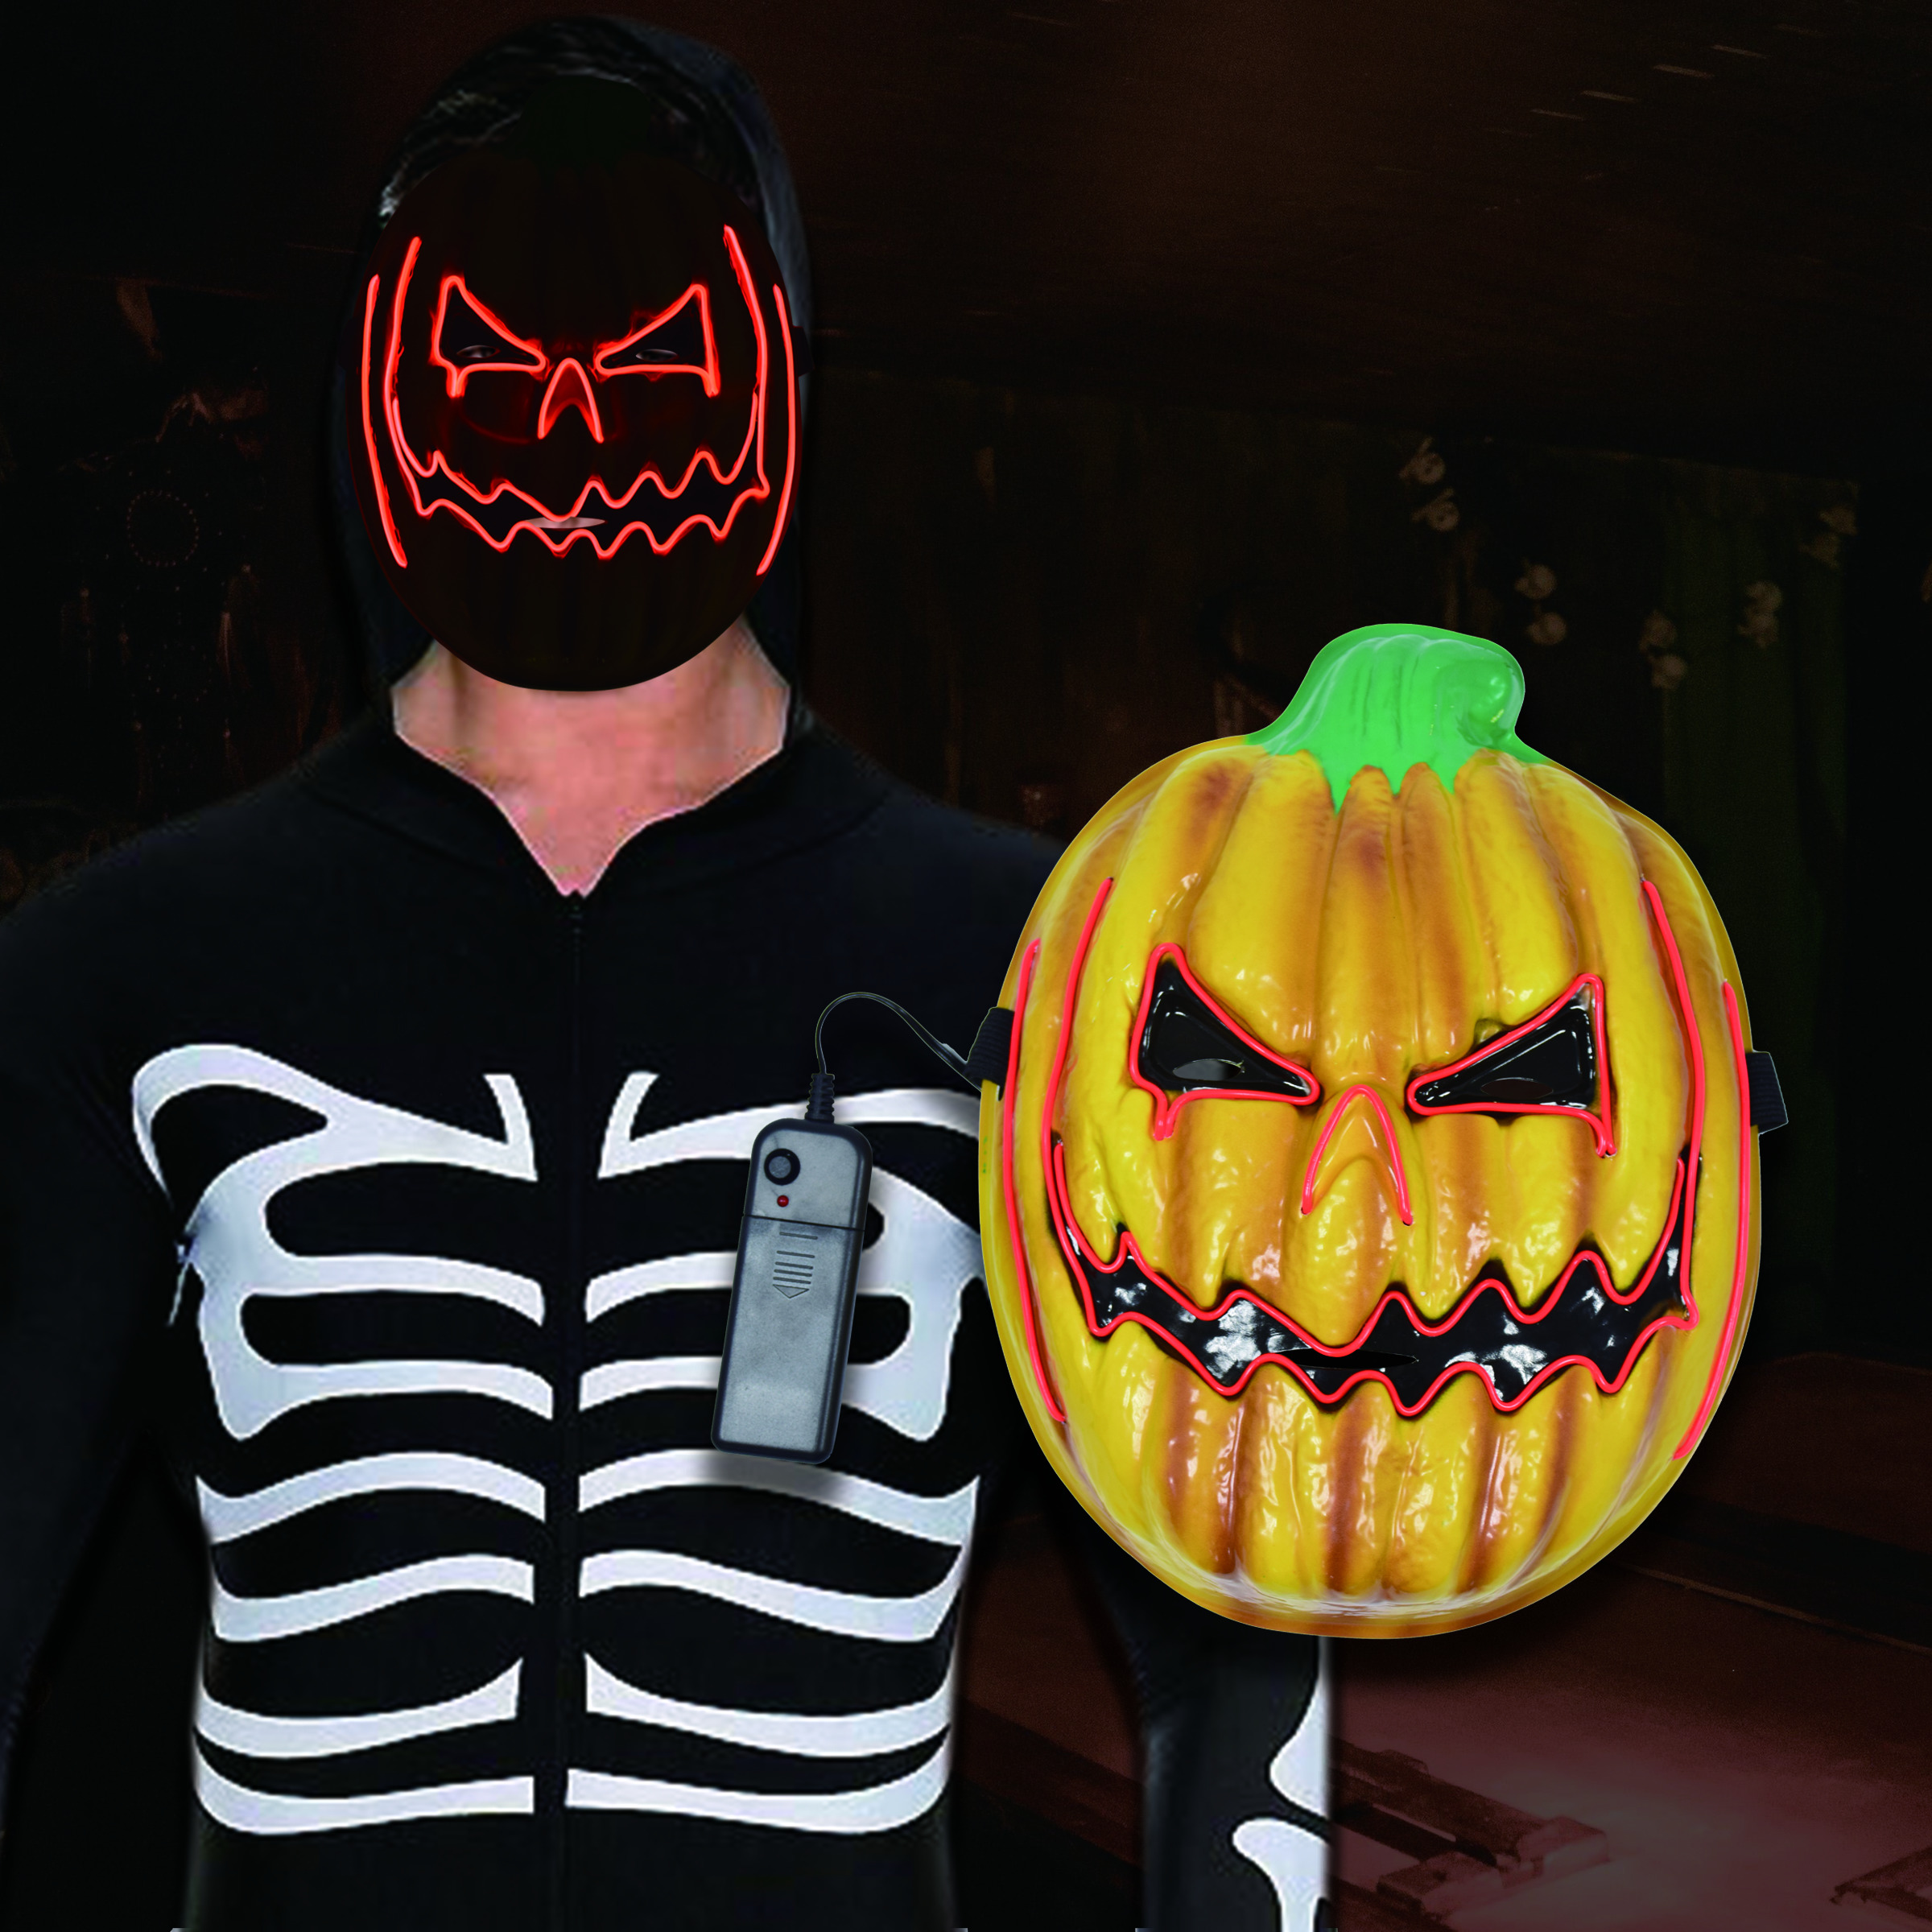 Halloween inotyisa cosplay led costume EL wire light up mask